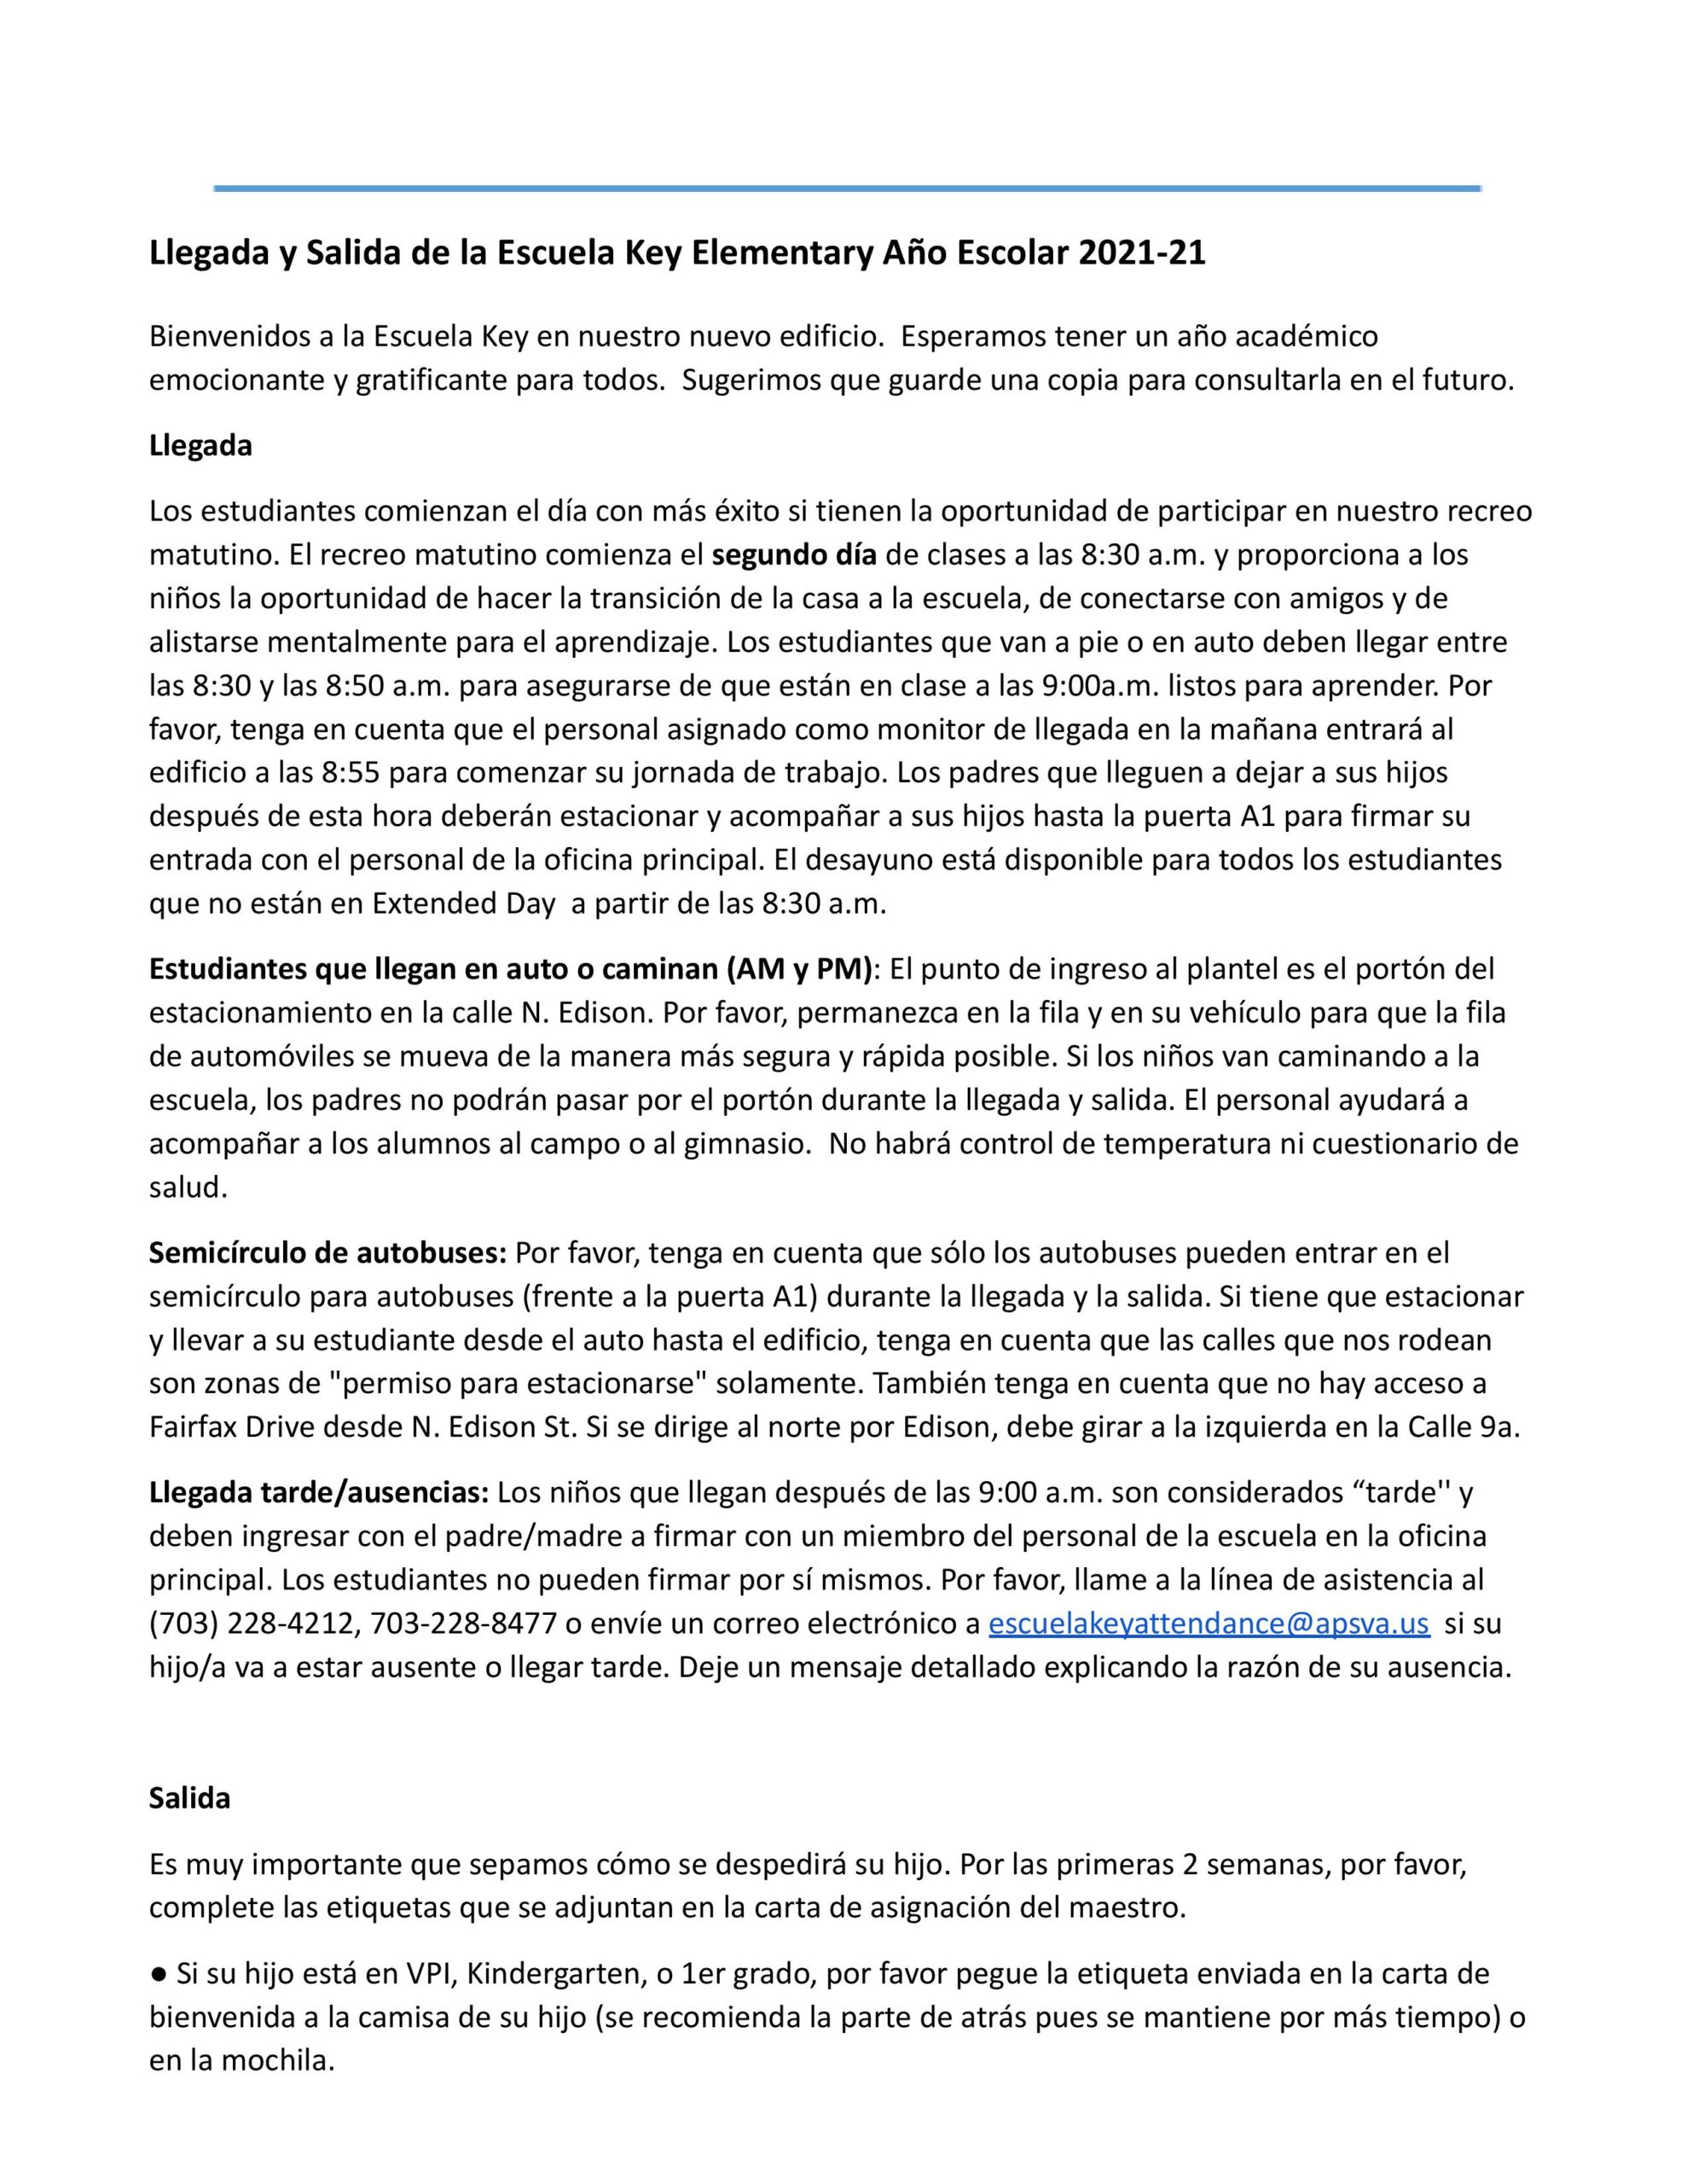 Escuela কী খোলার আগমন এবং বরখাস্ত তথ্য 2021-22SY-পৃষ্ঠা-004